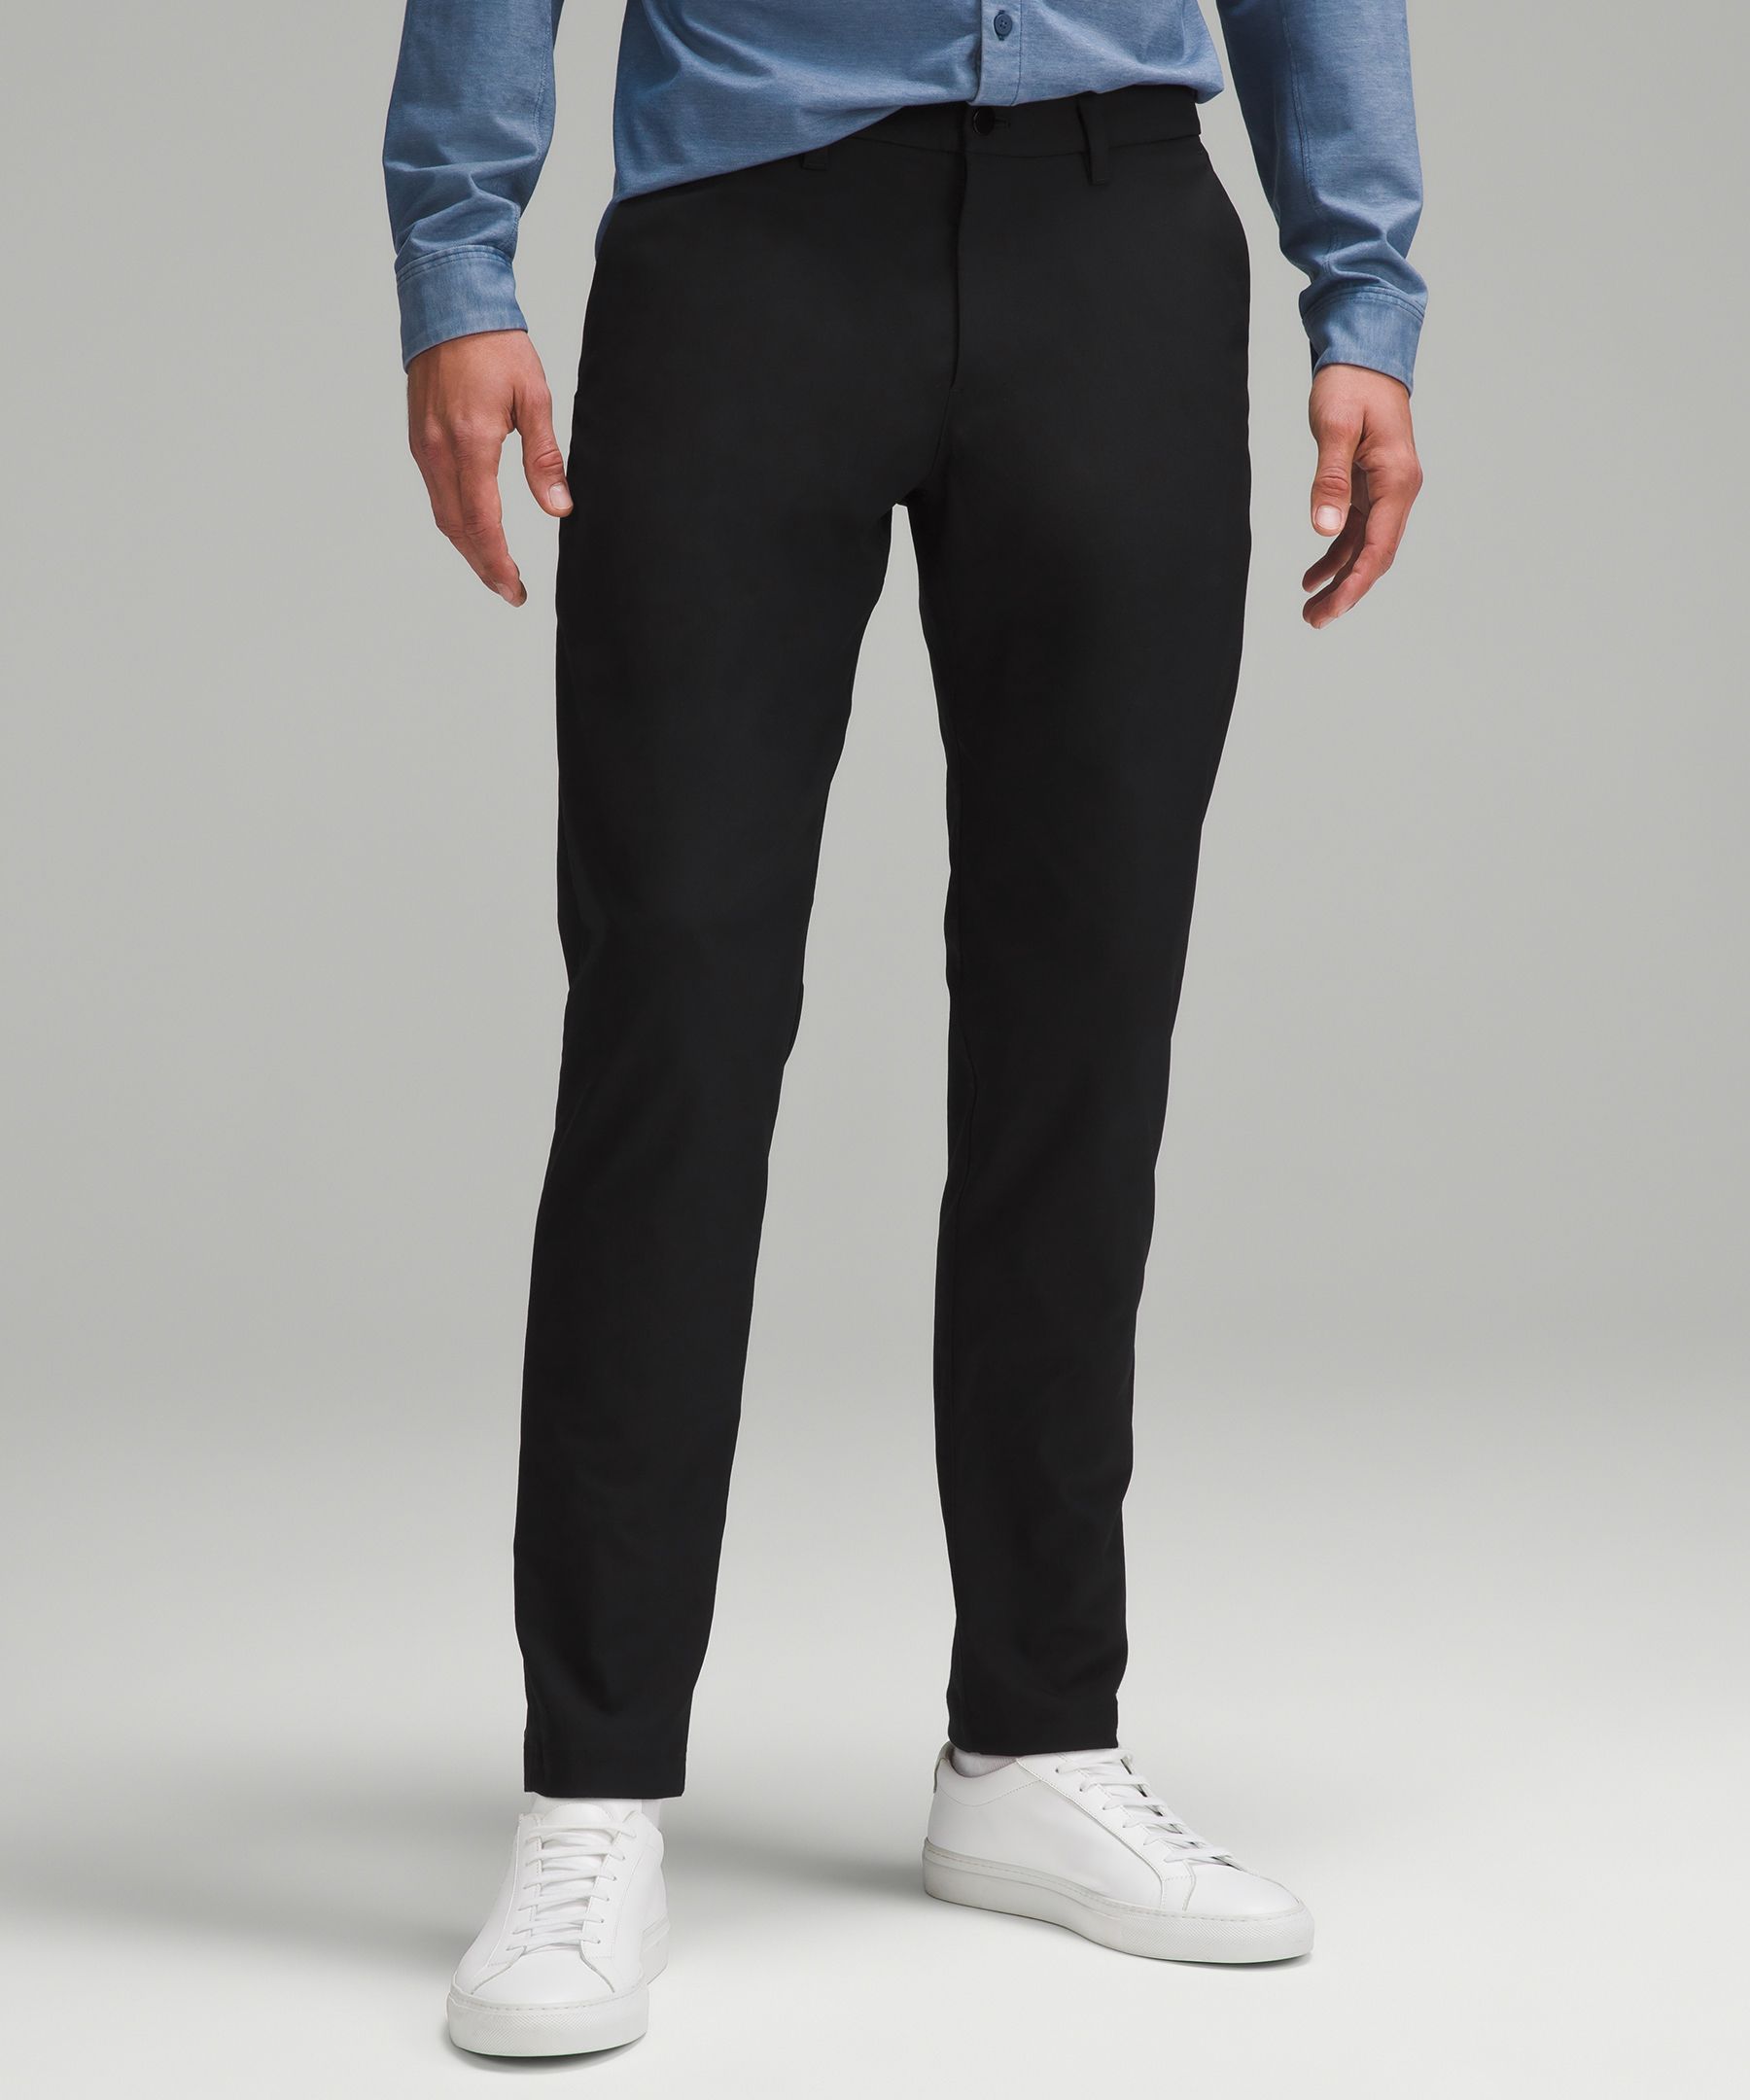 ABC Slim-Fit Trouser 32L *Smooth Twill